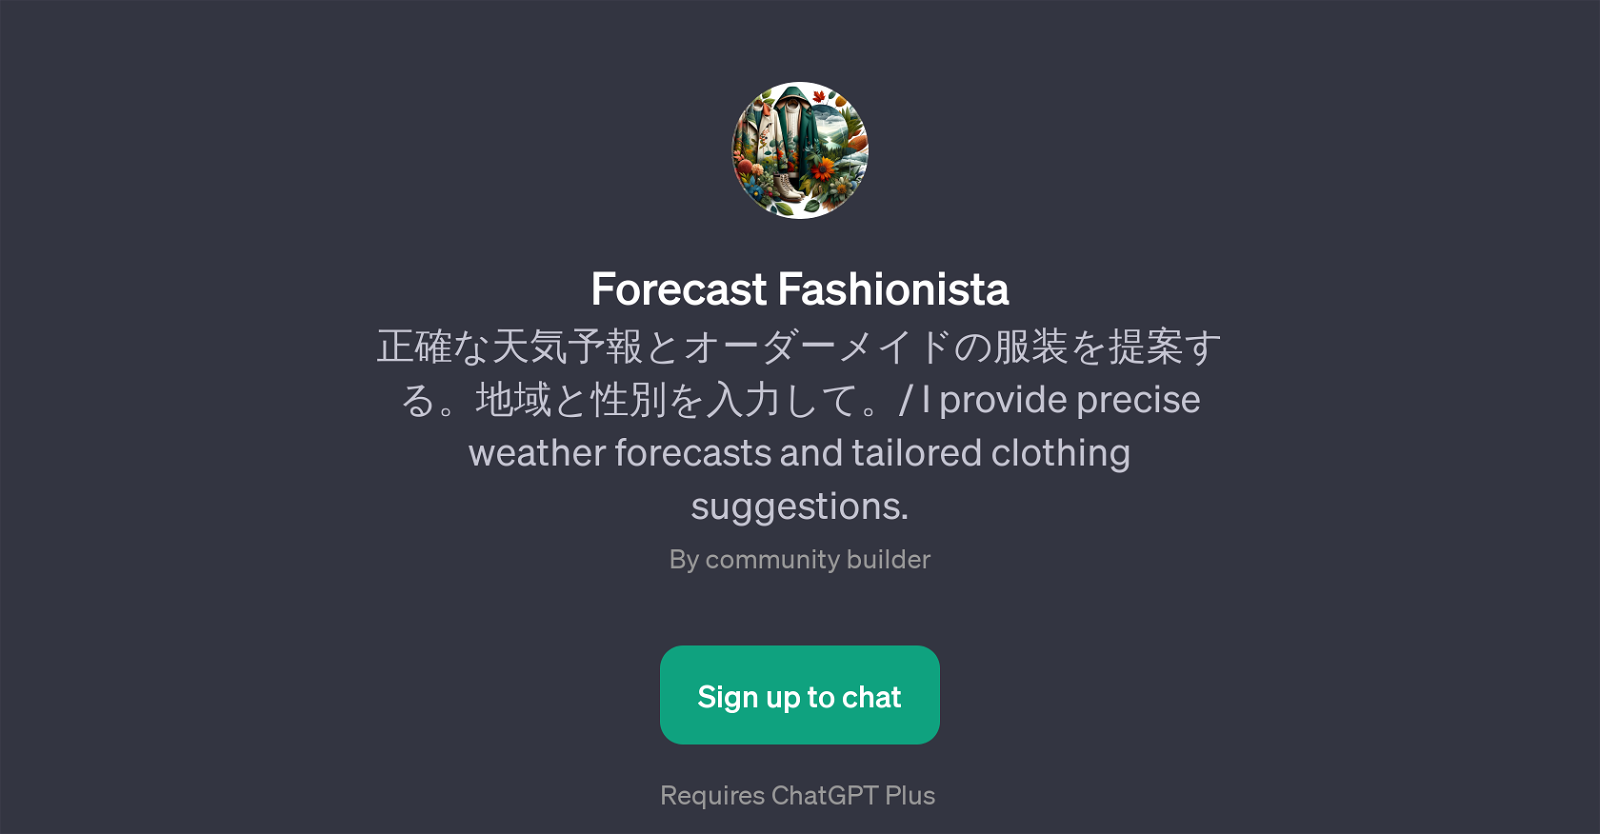 Forecast Fashionista website